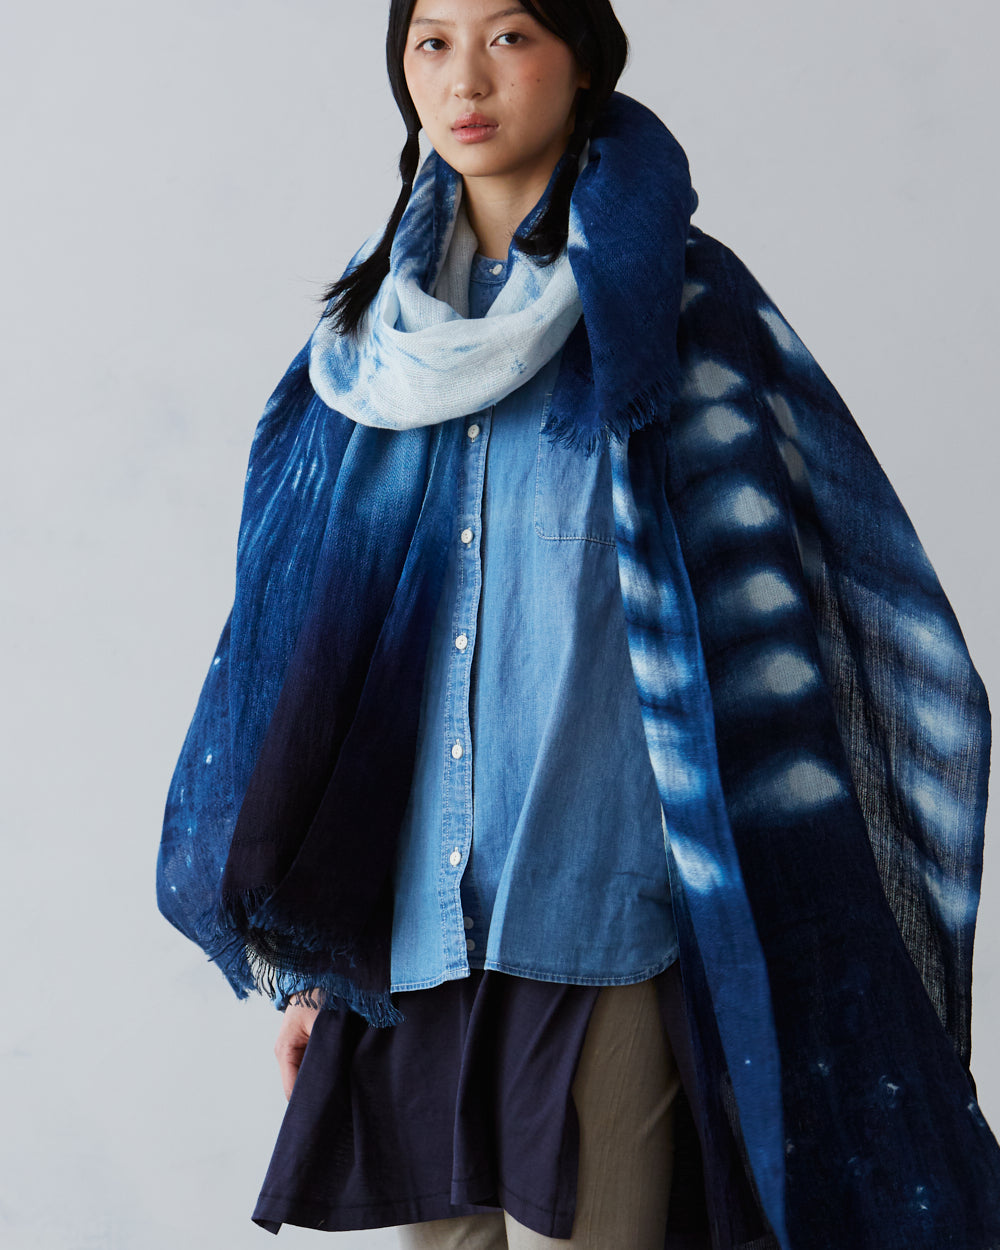 Mica – Indigofärgad sjal i linne. Numrerad upplaga